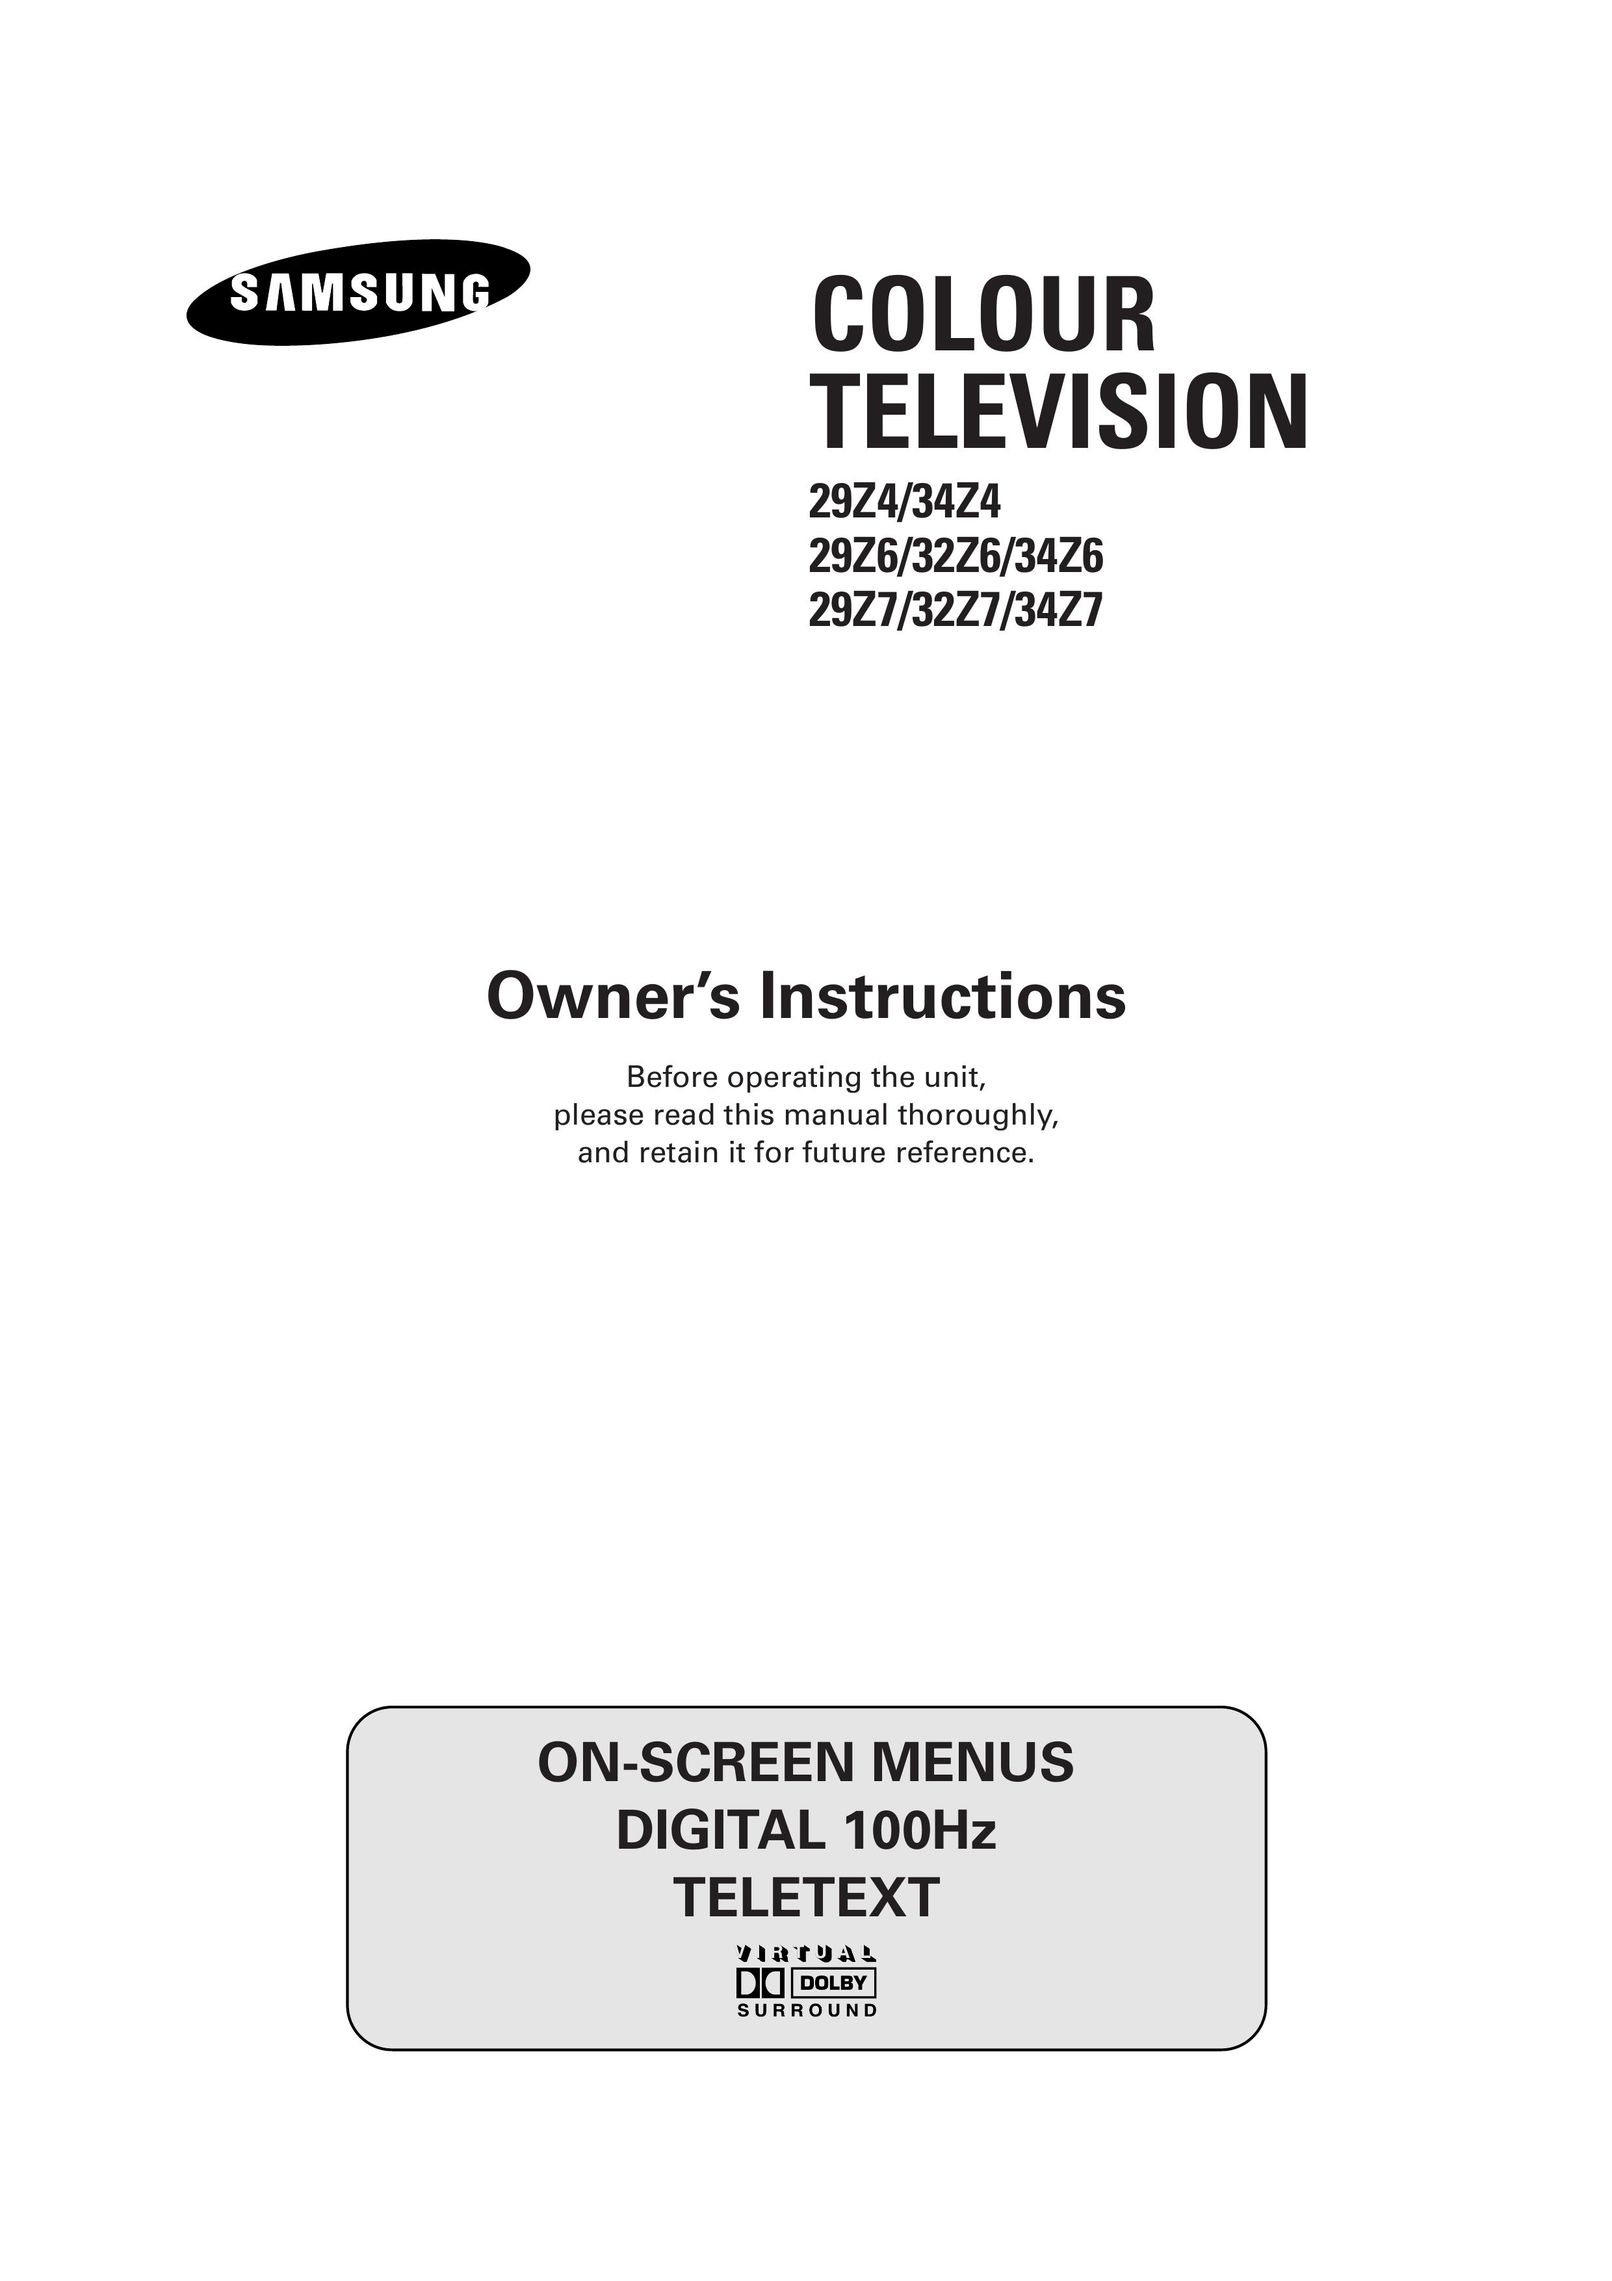 Samsung 34Z6 CRT Television User Manual